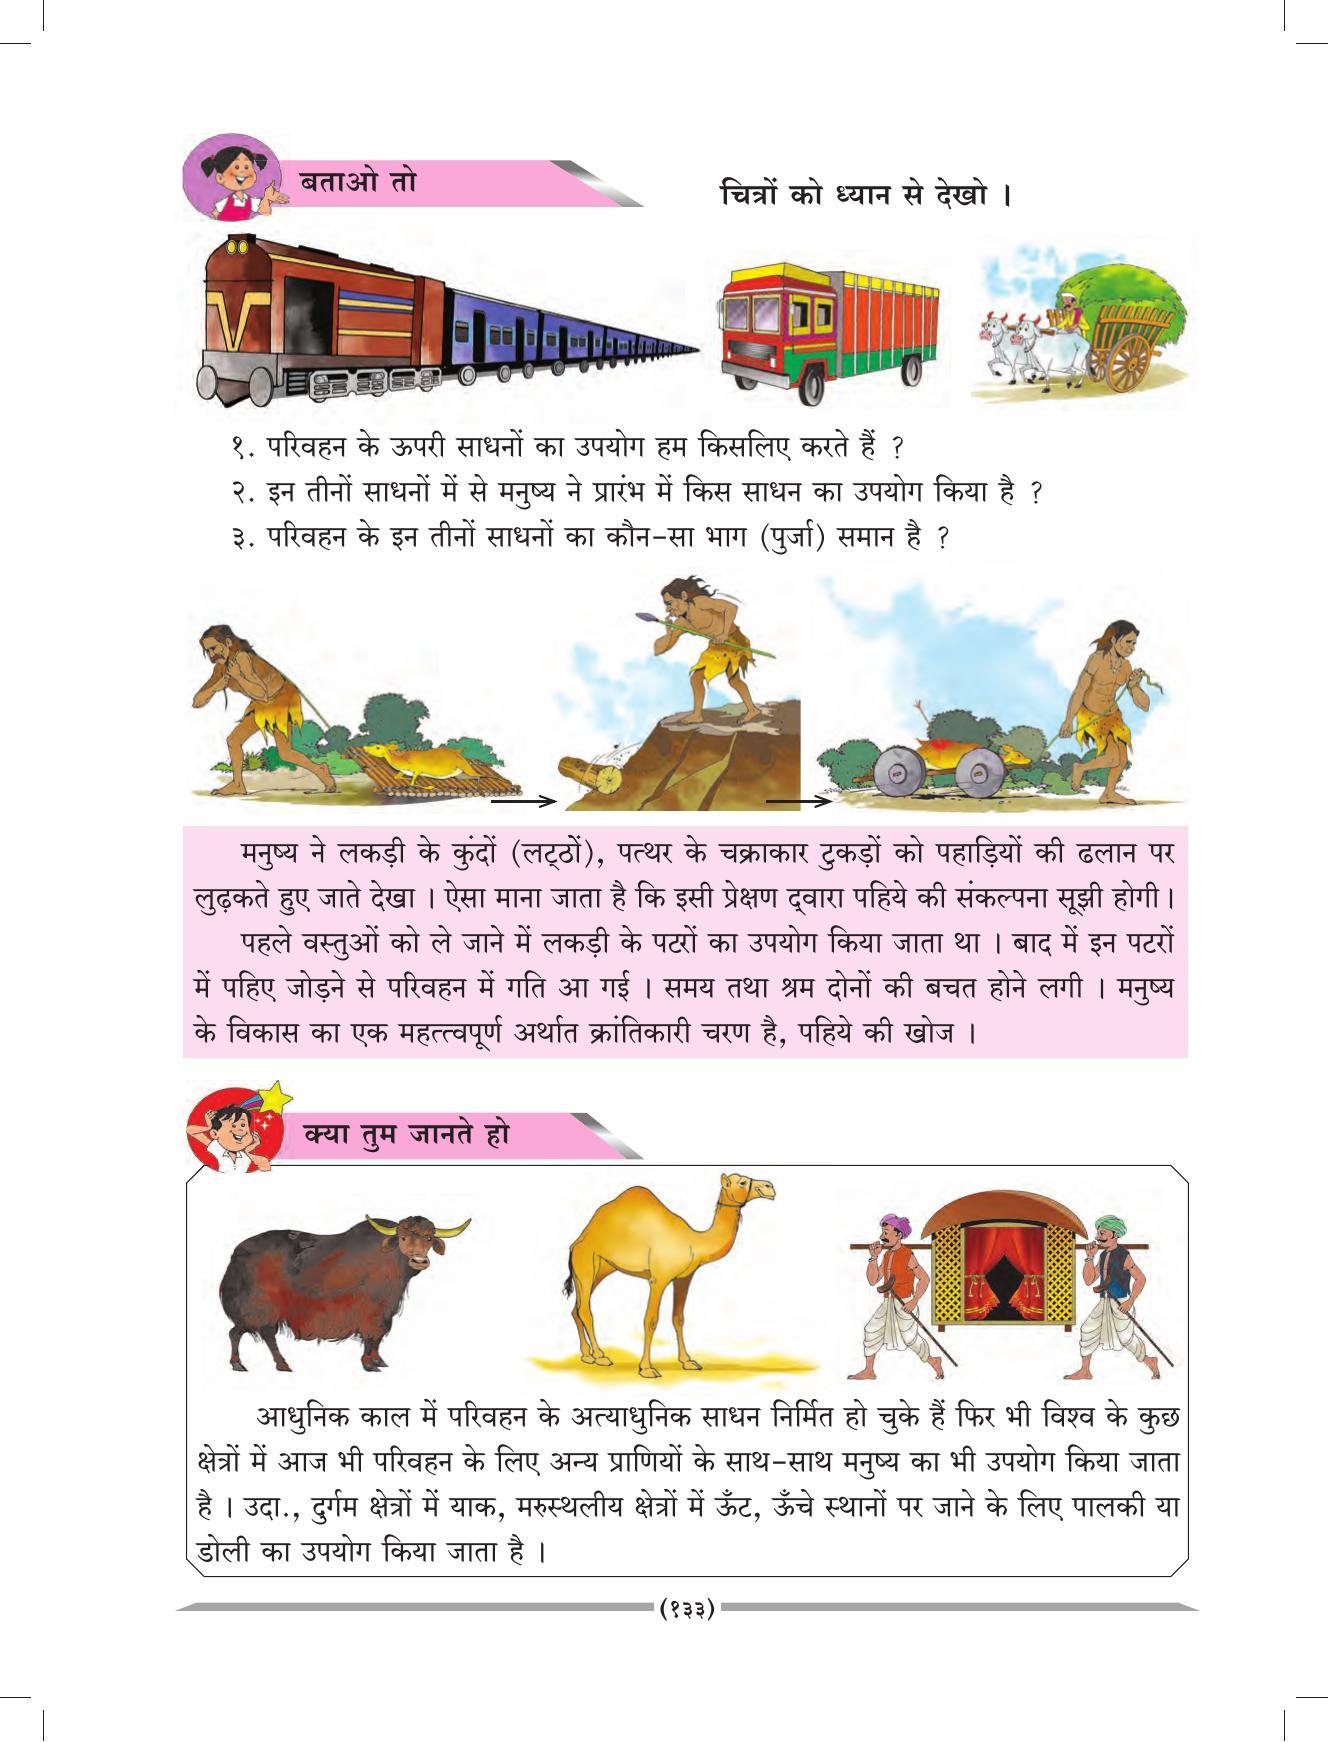 Maharashtra Board Class 4 EVS 1 (Hindi Medium) Textbook - Page 143